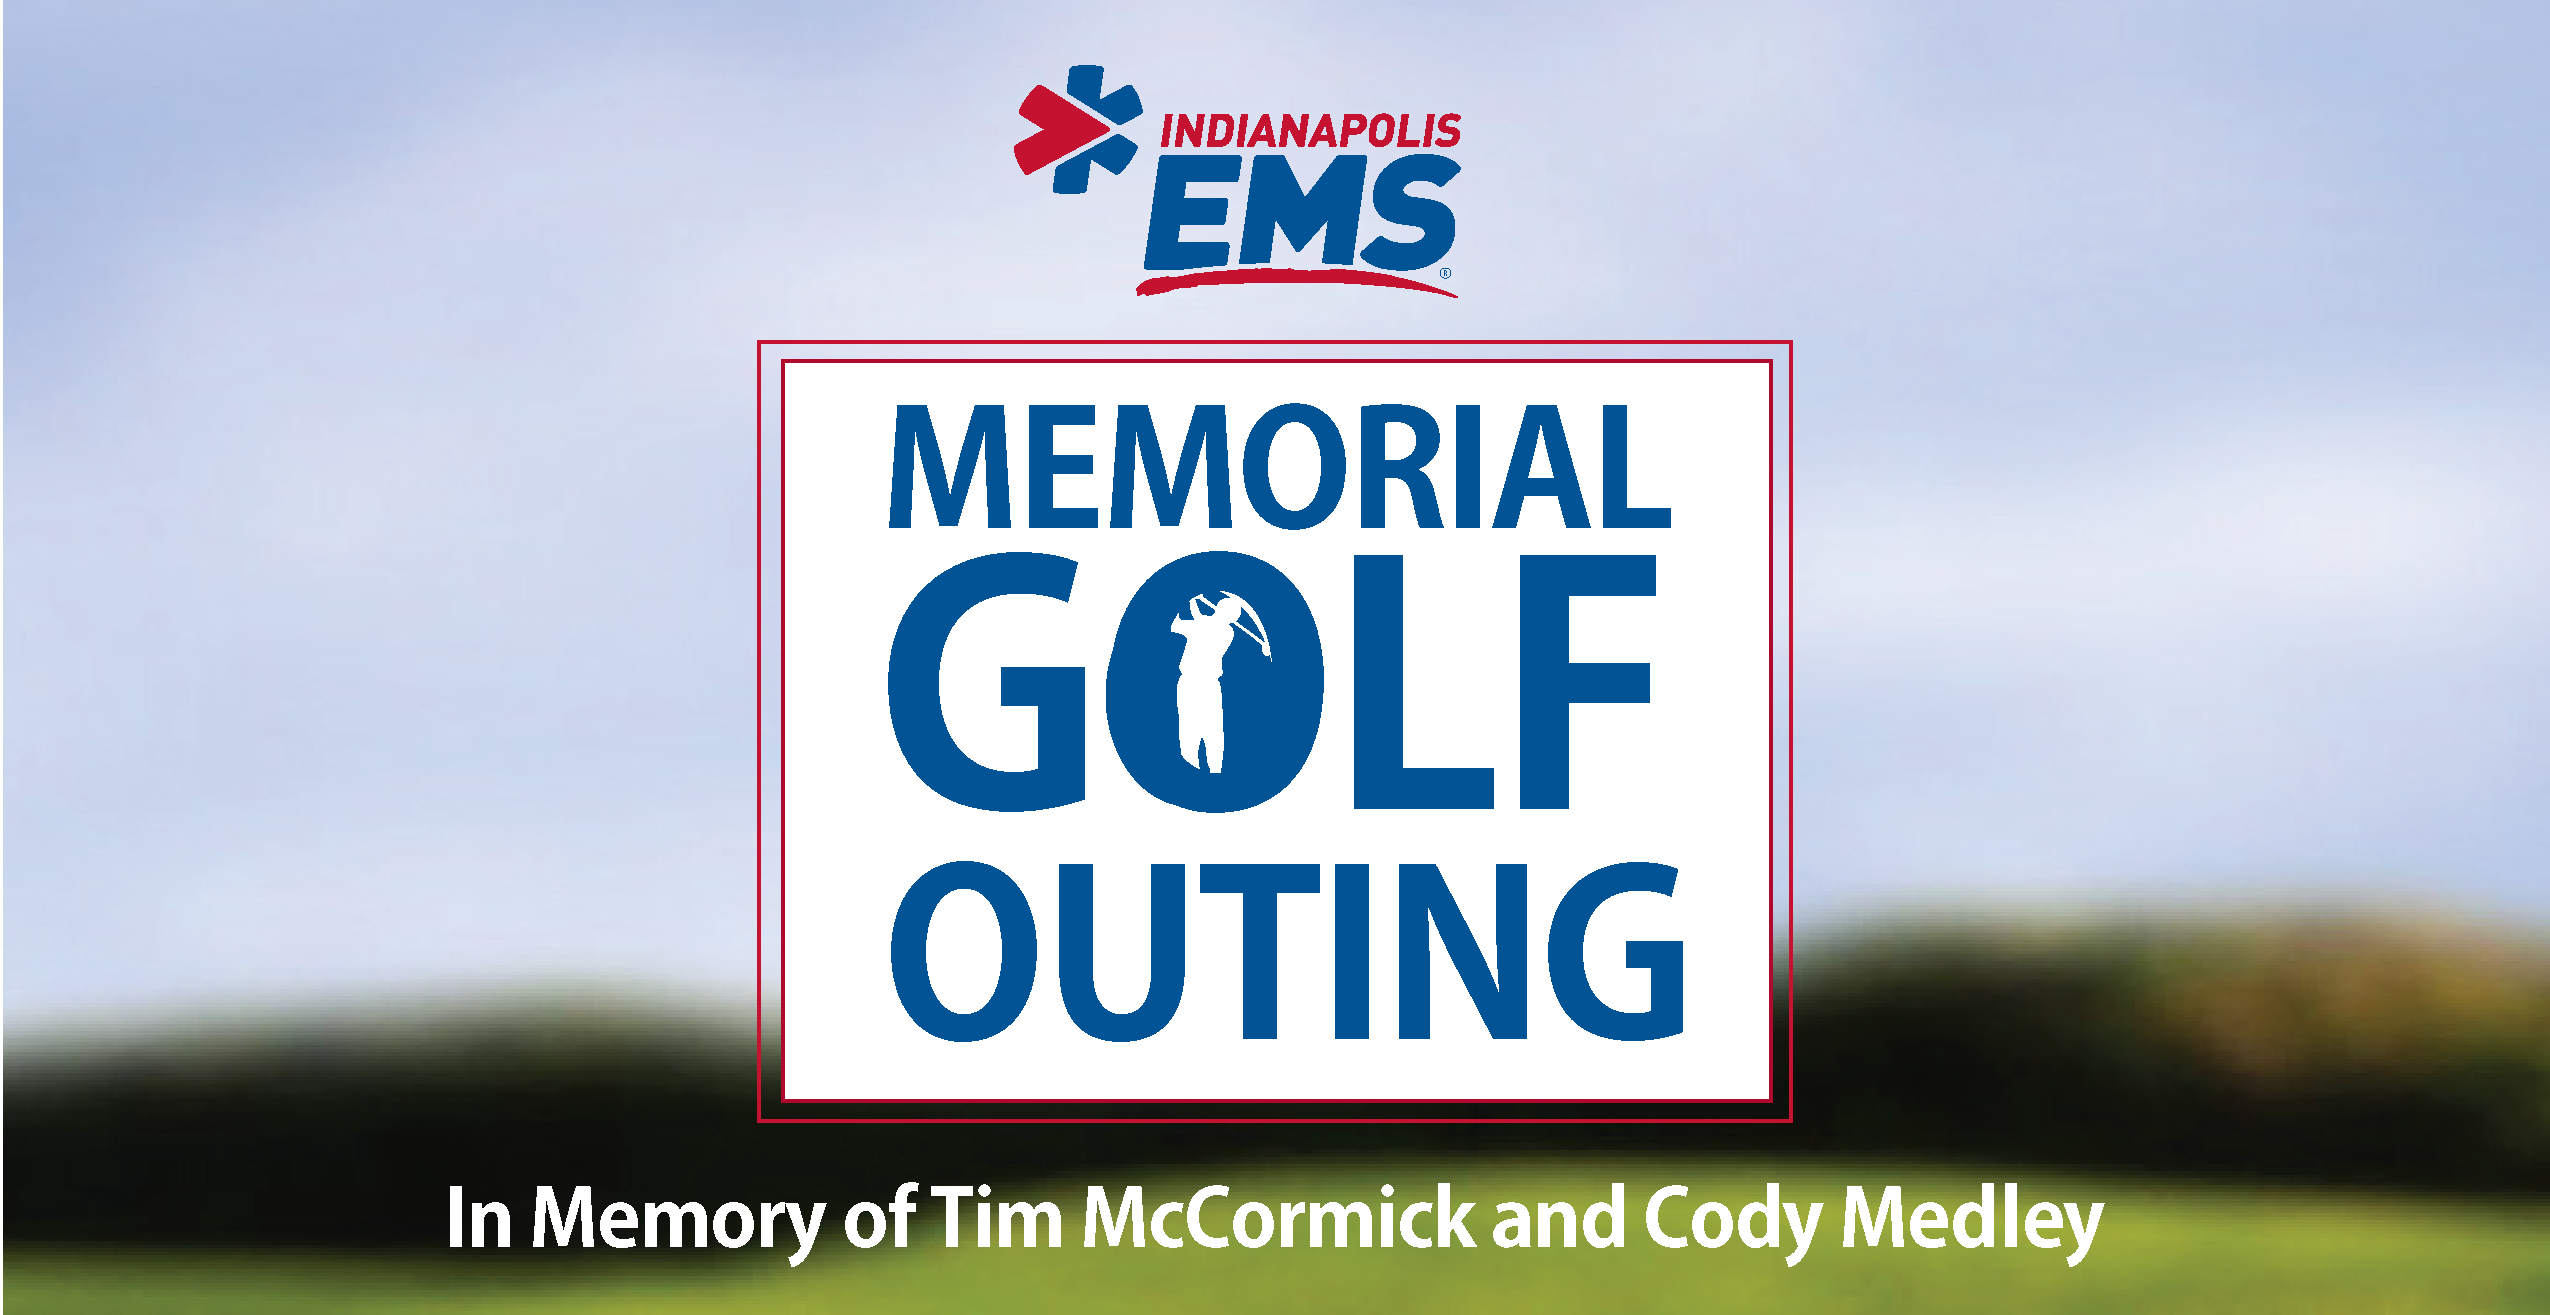 2019 IEMS Memorial Golf Outing